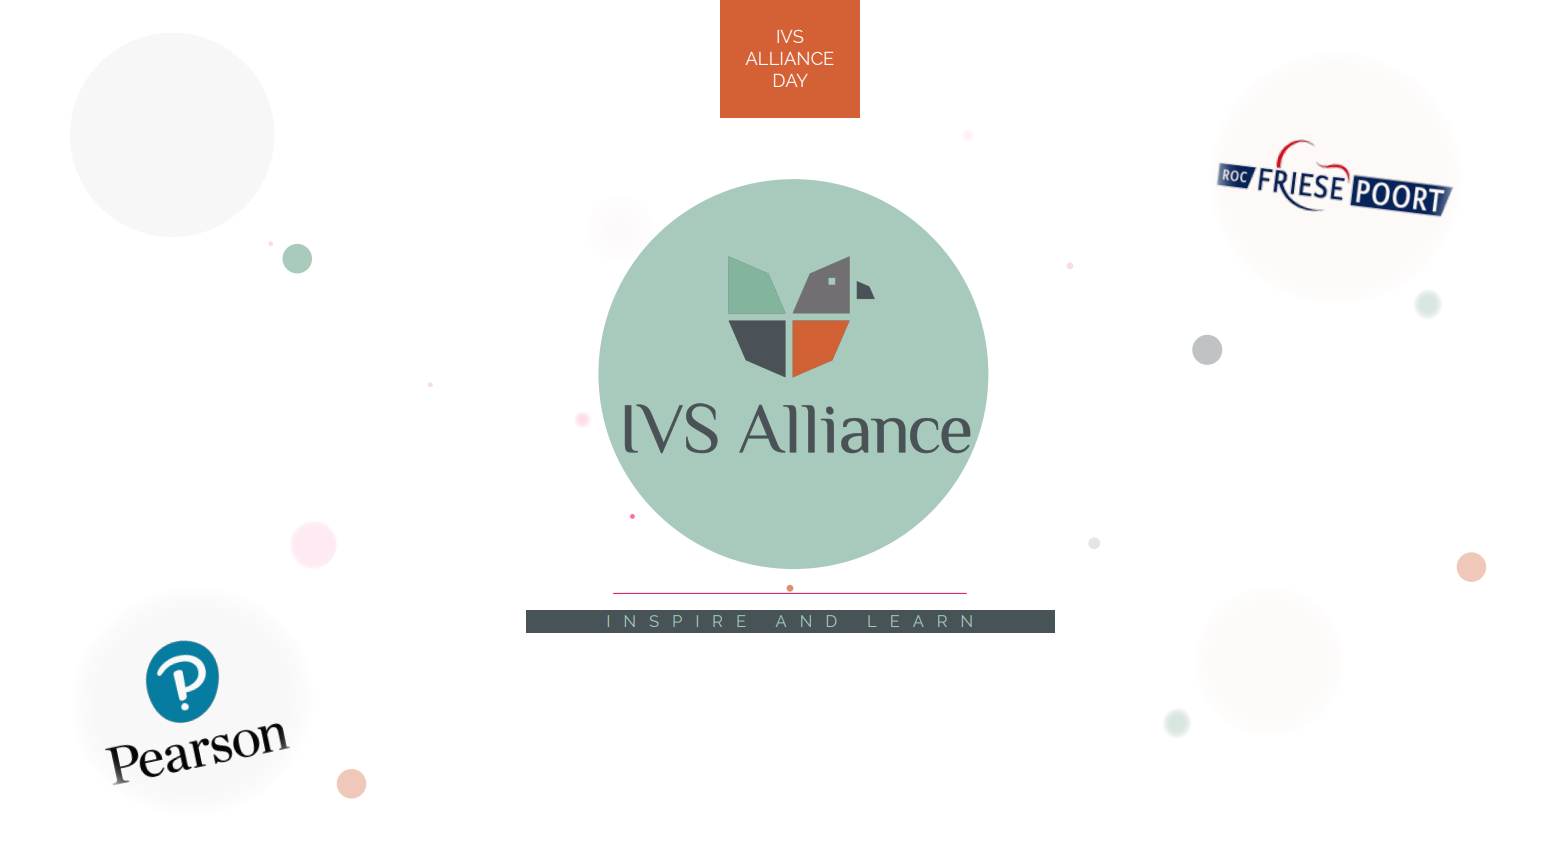 invitation Alliance Day 2020